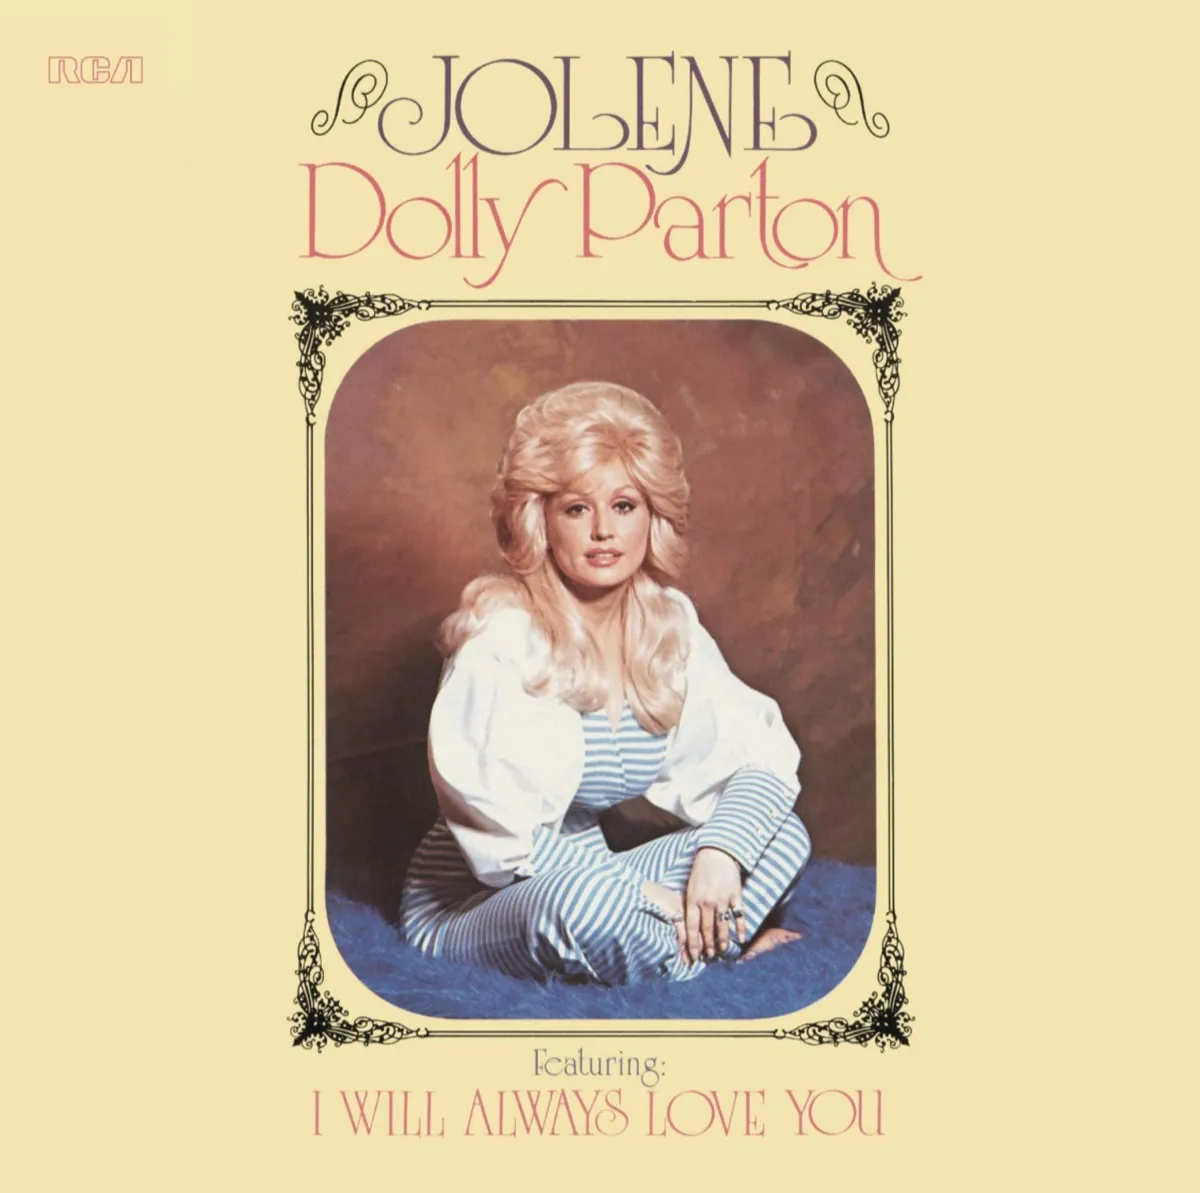 Jolene by Dolly Parton